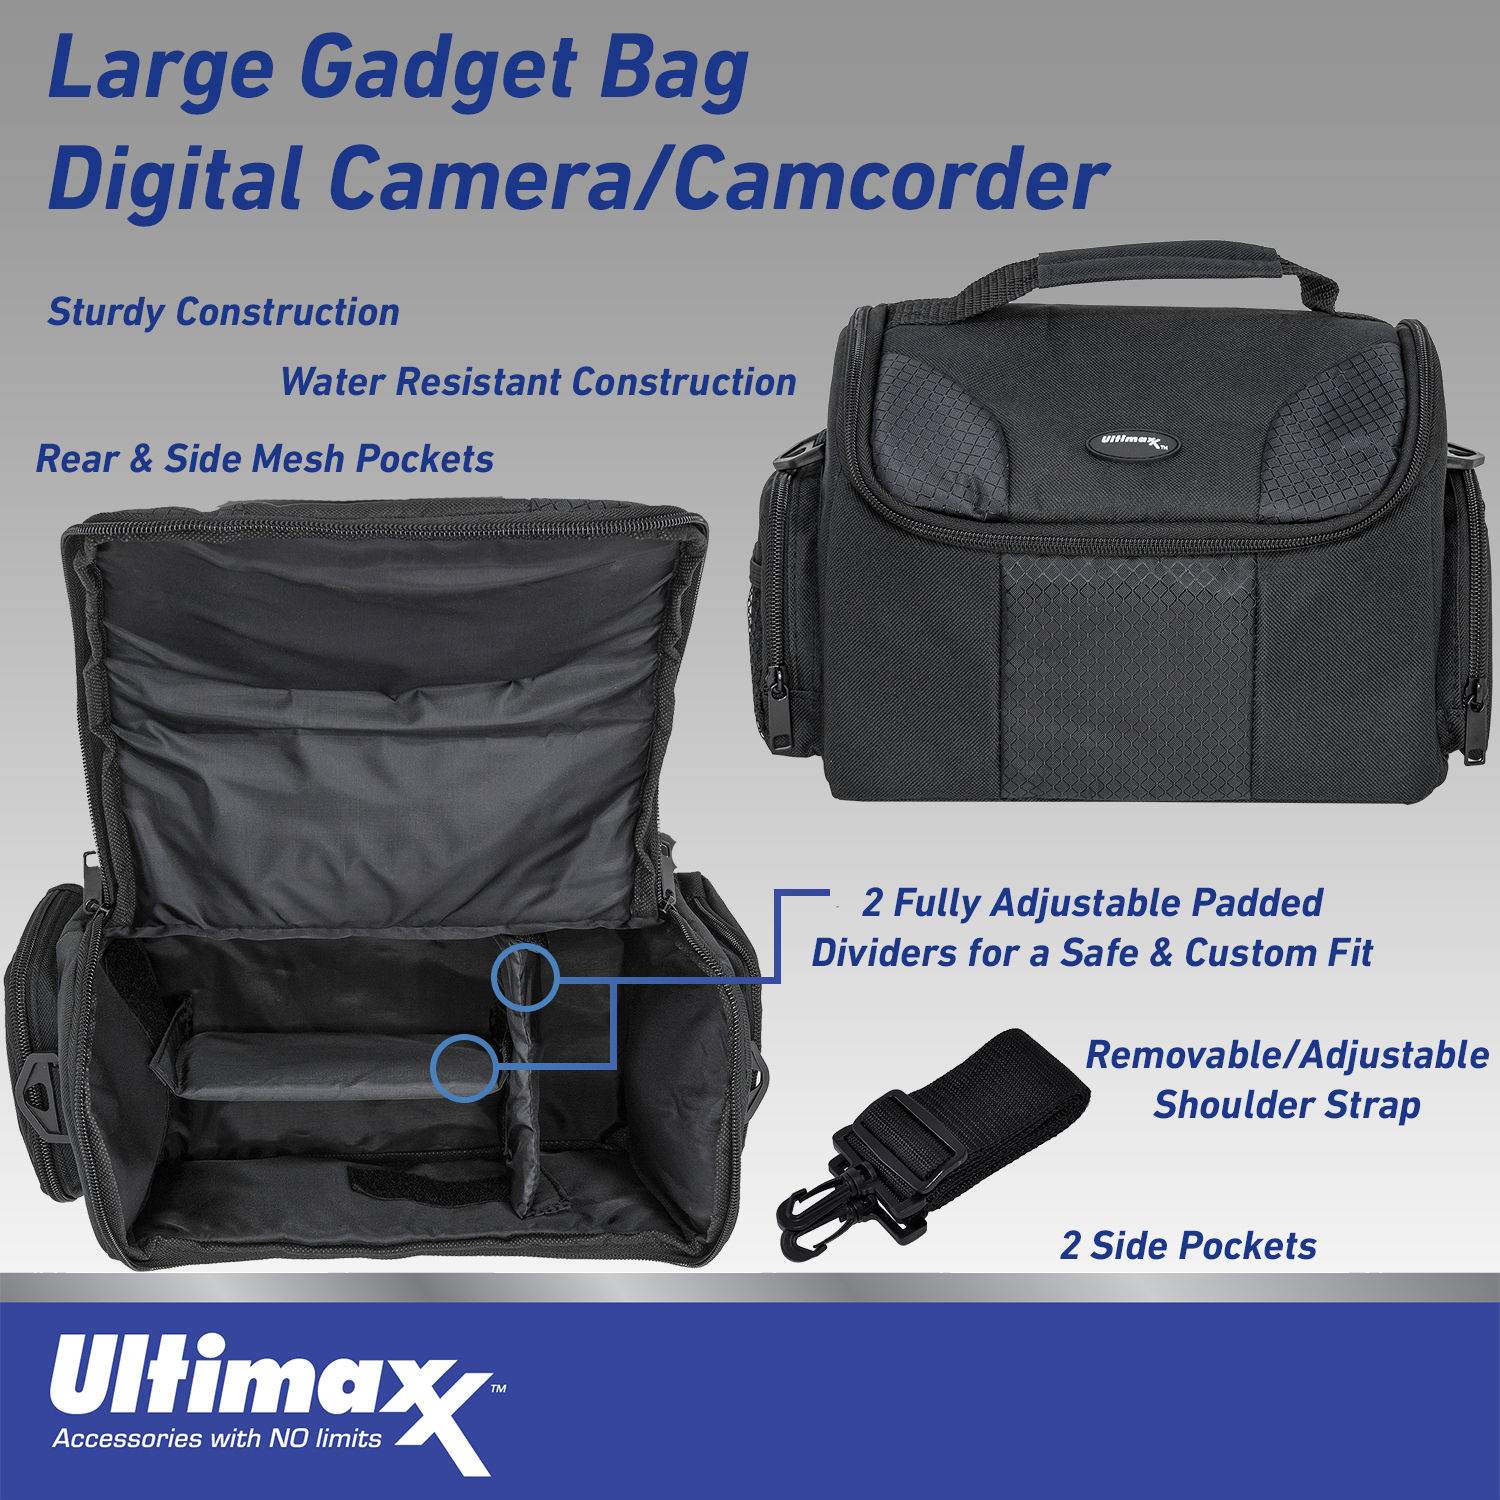 Large Gadget Bag Digital Camera/Camcorder - Ultimaxx